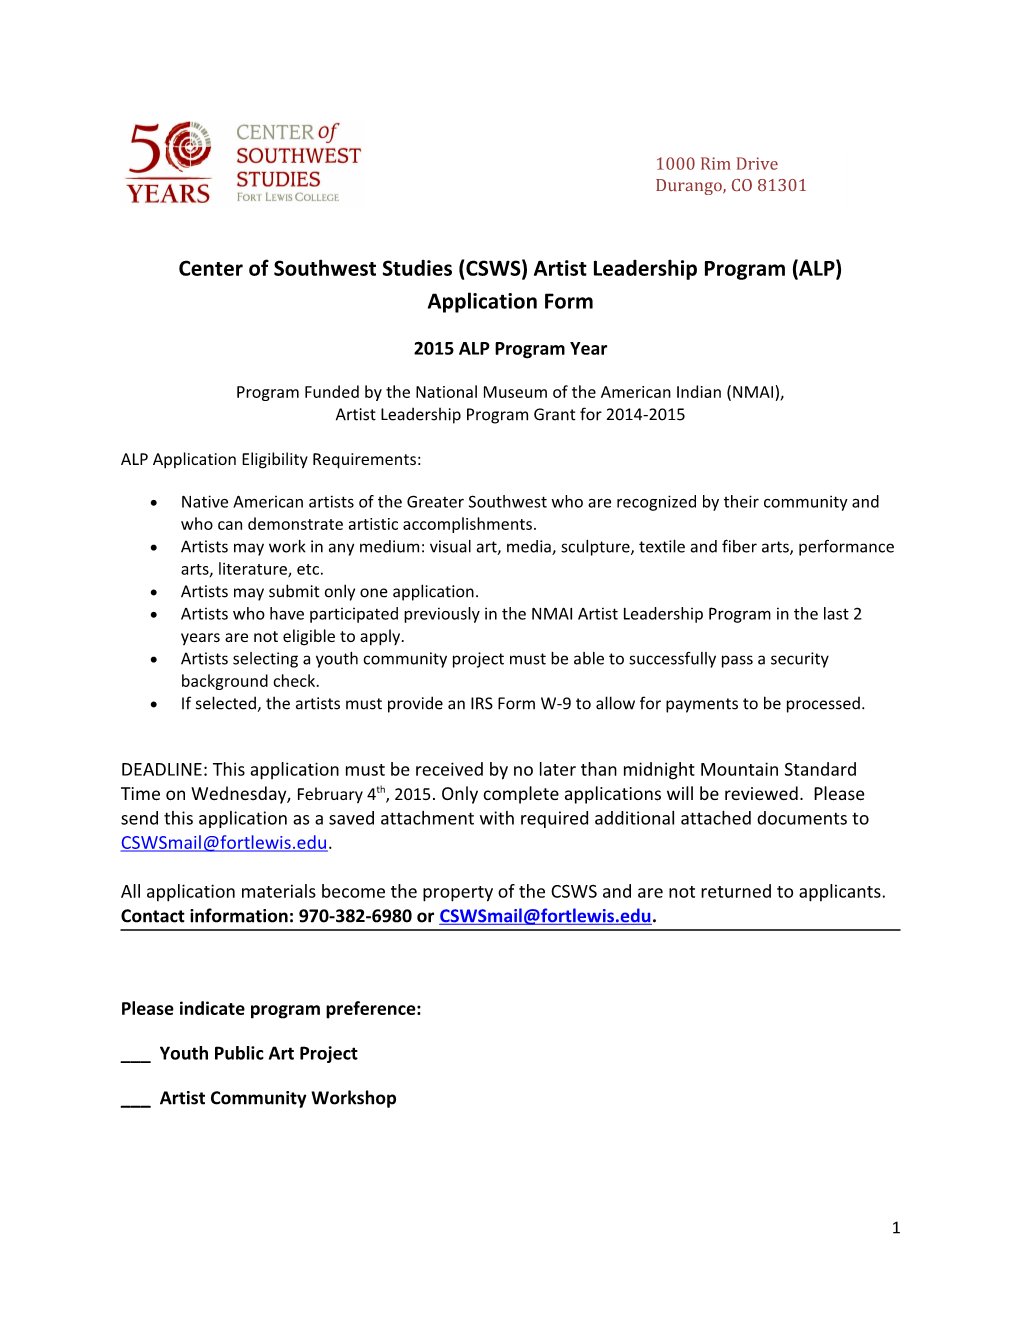 Center of Southwest Studies (CSWS) Artist Leadership Program (ALP) Application Form